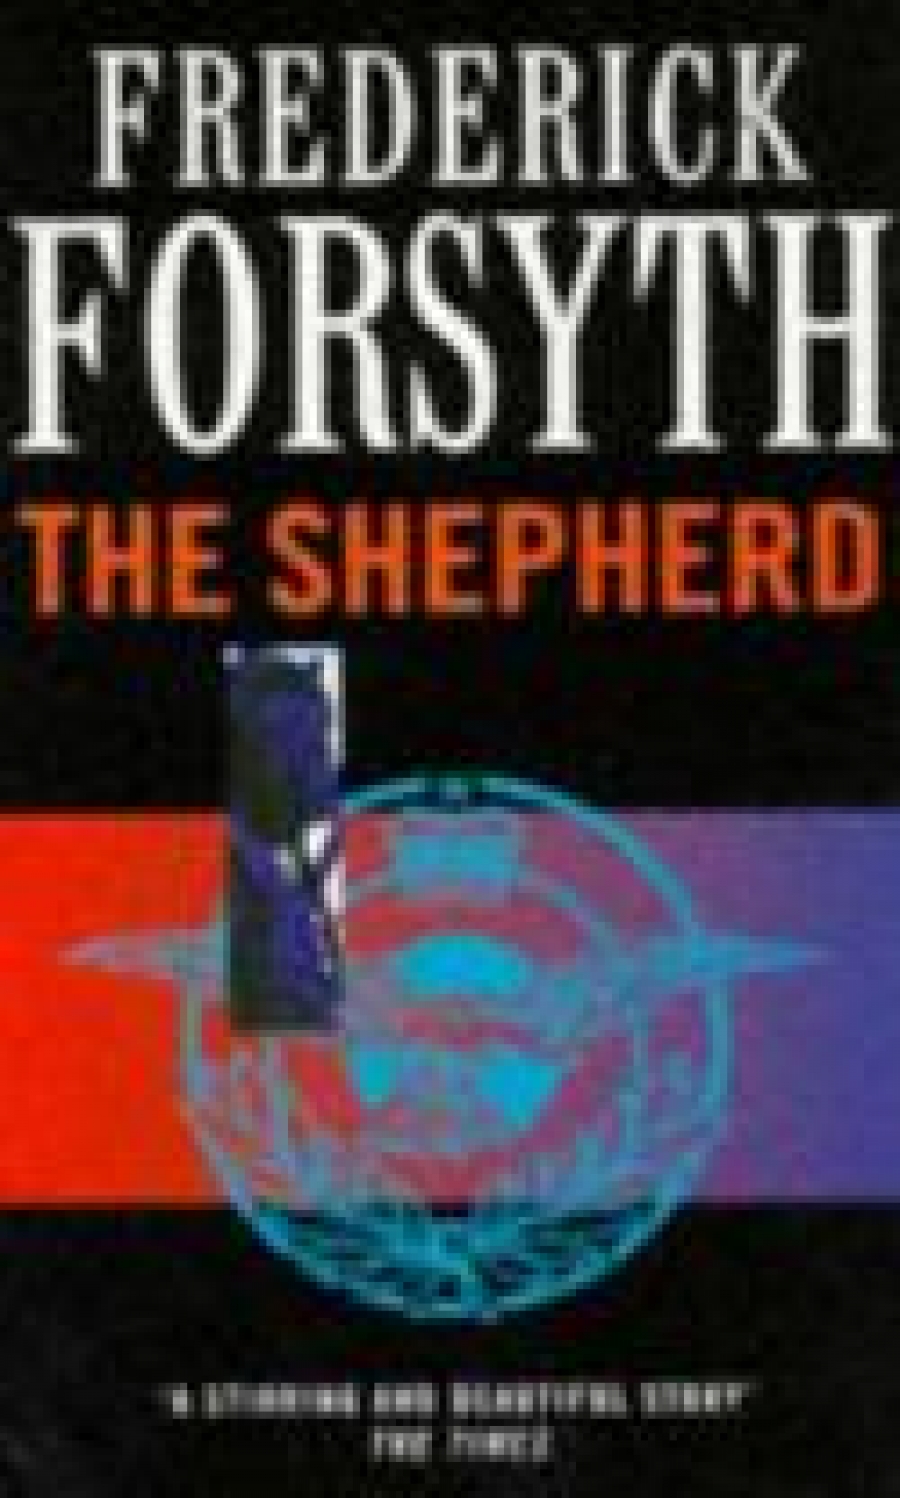 Forsyth, Frederick The Shepherd 